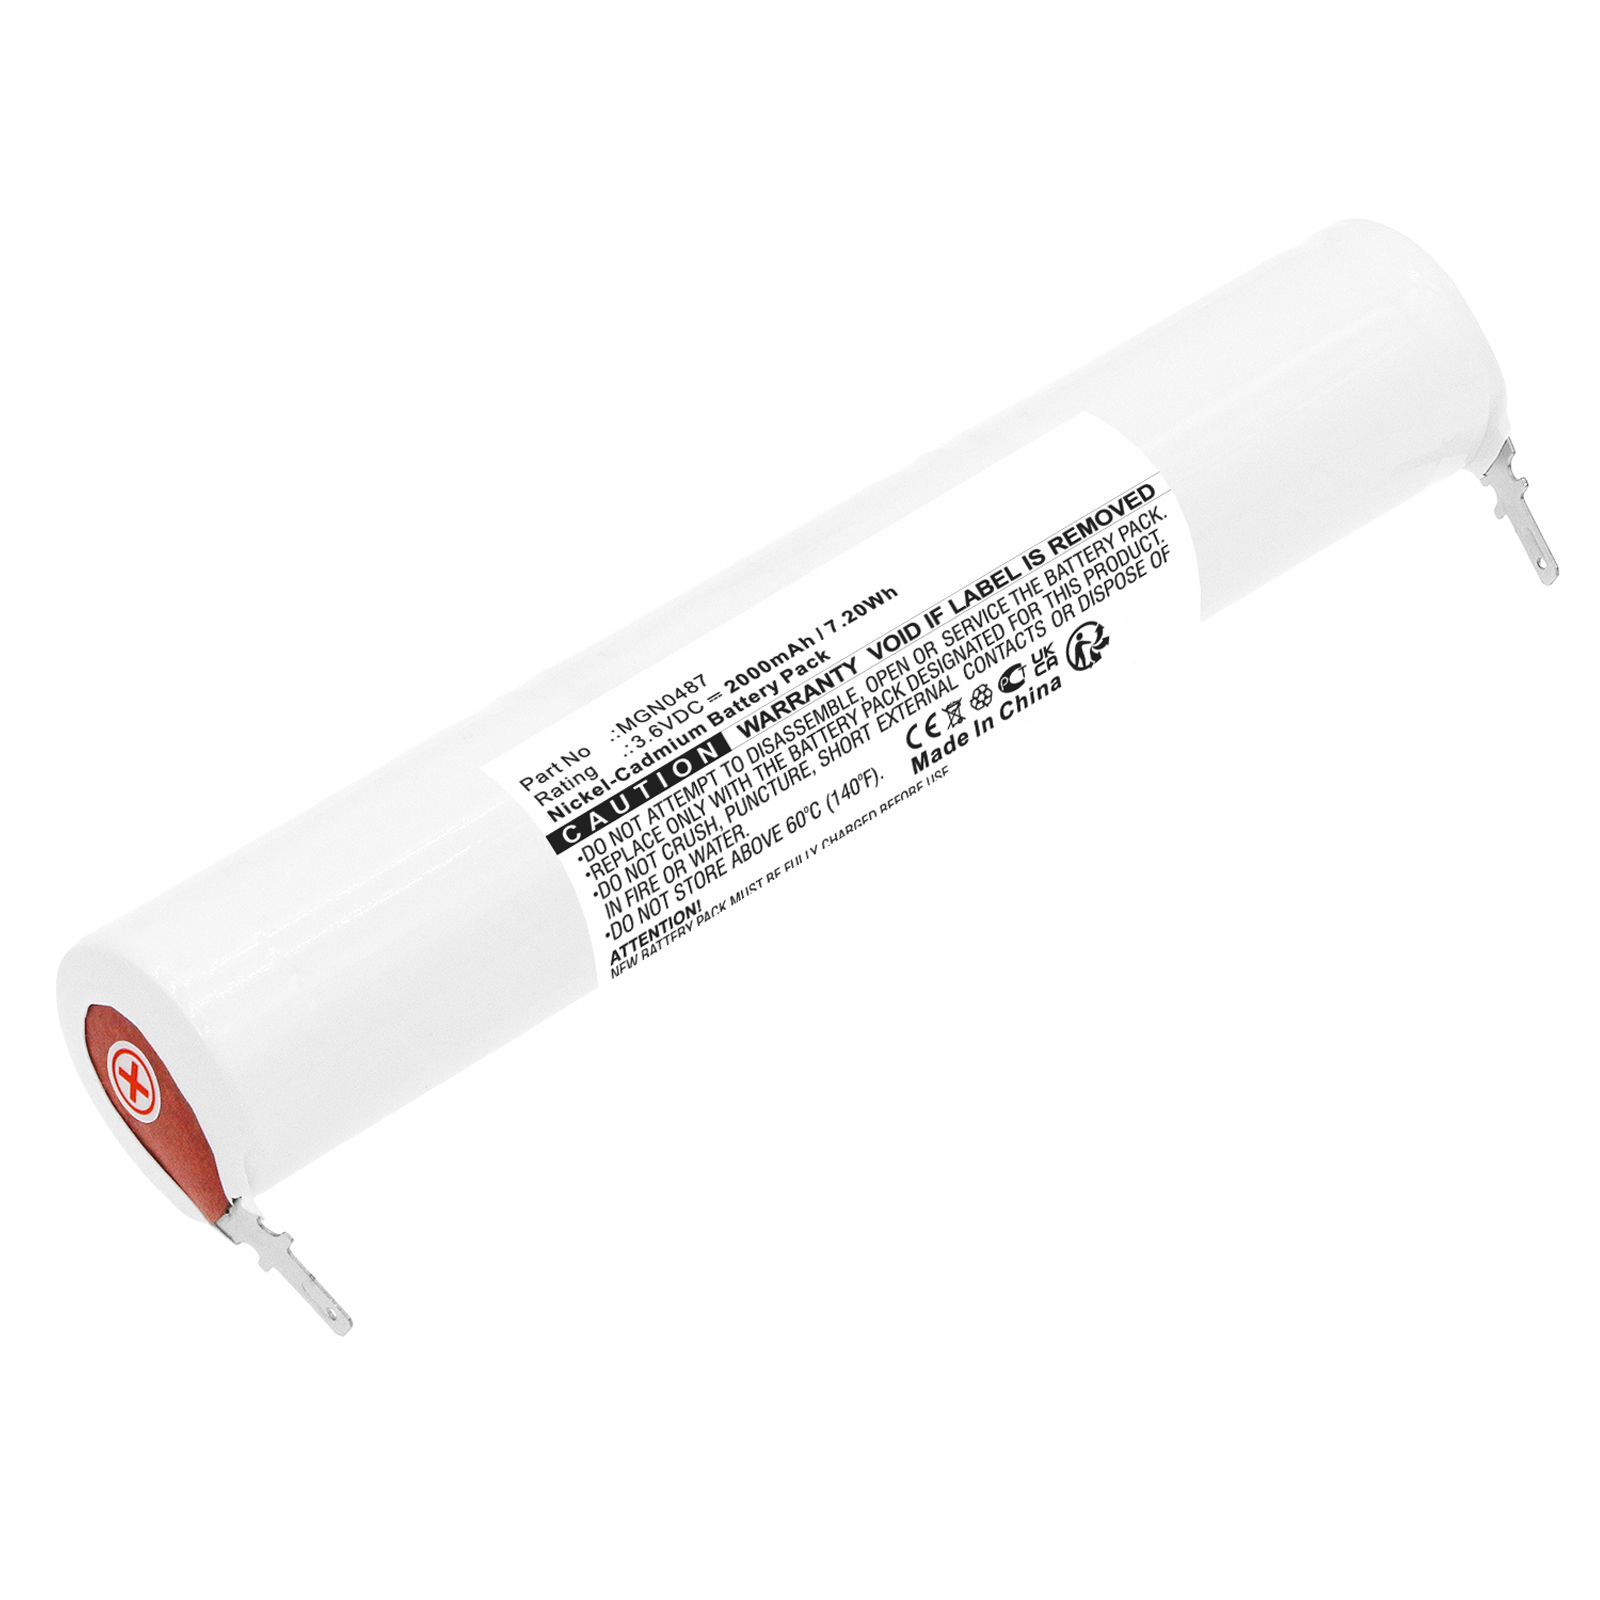 Synergy Digital Emergency Lighting Battery Compatible with Schneider MGN0487 Emergency Lighting Battery (Ni-CD, 3.6V, 2000mAh)